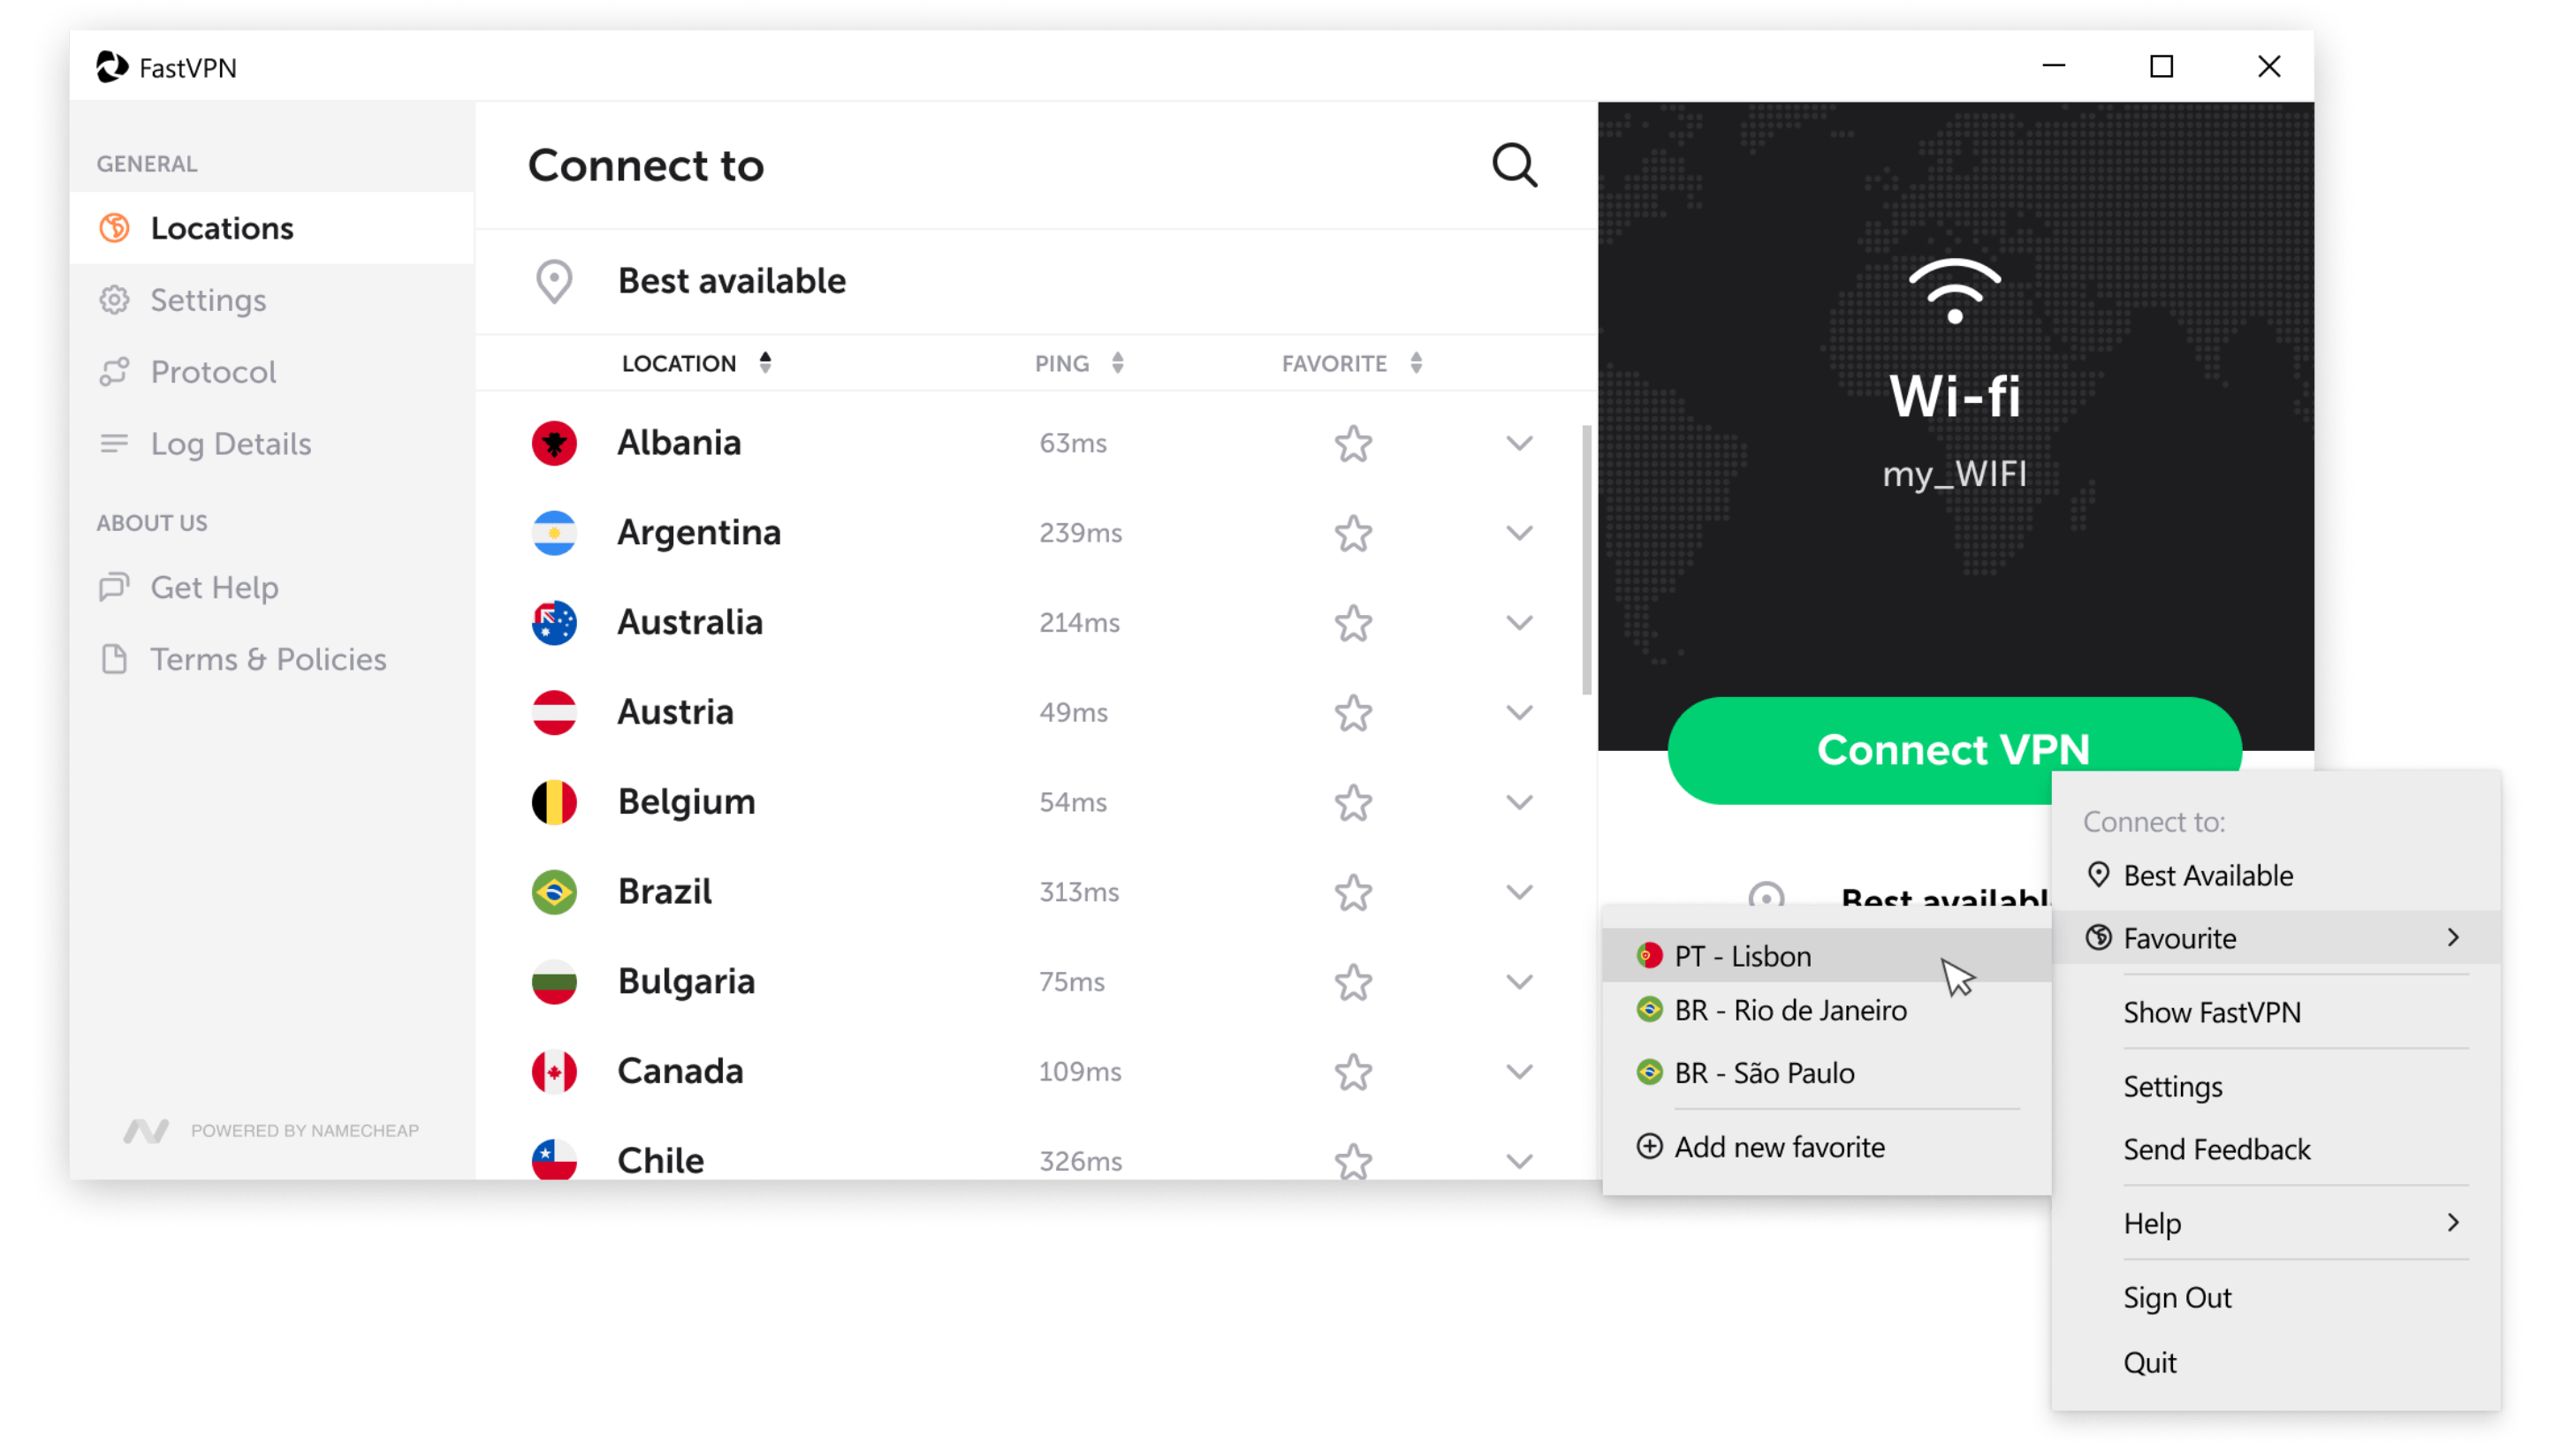 VPN grátis para PC/Laptop